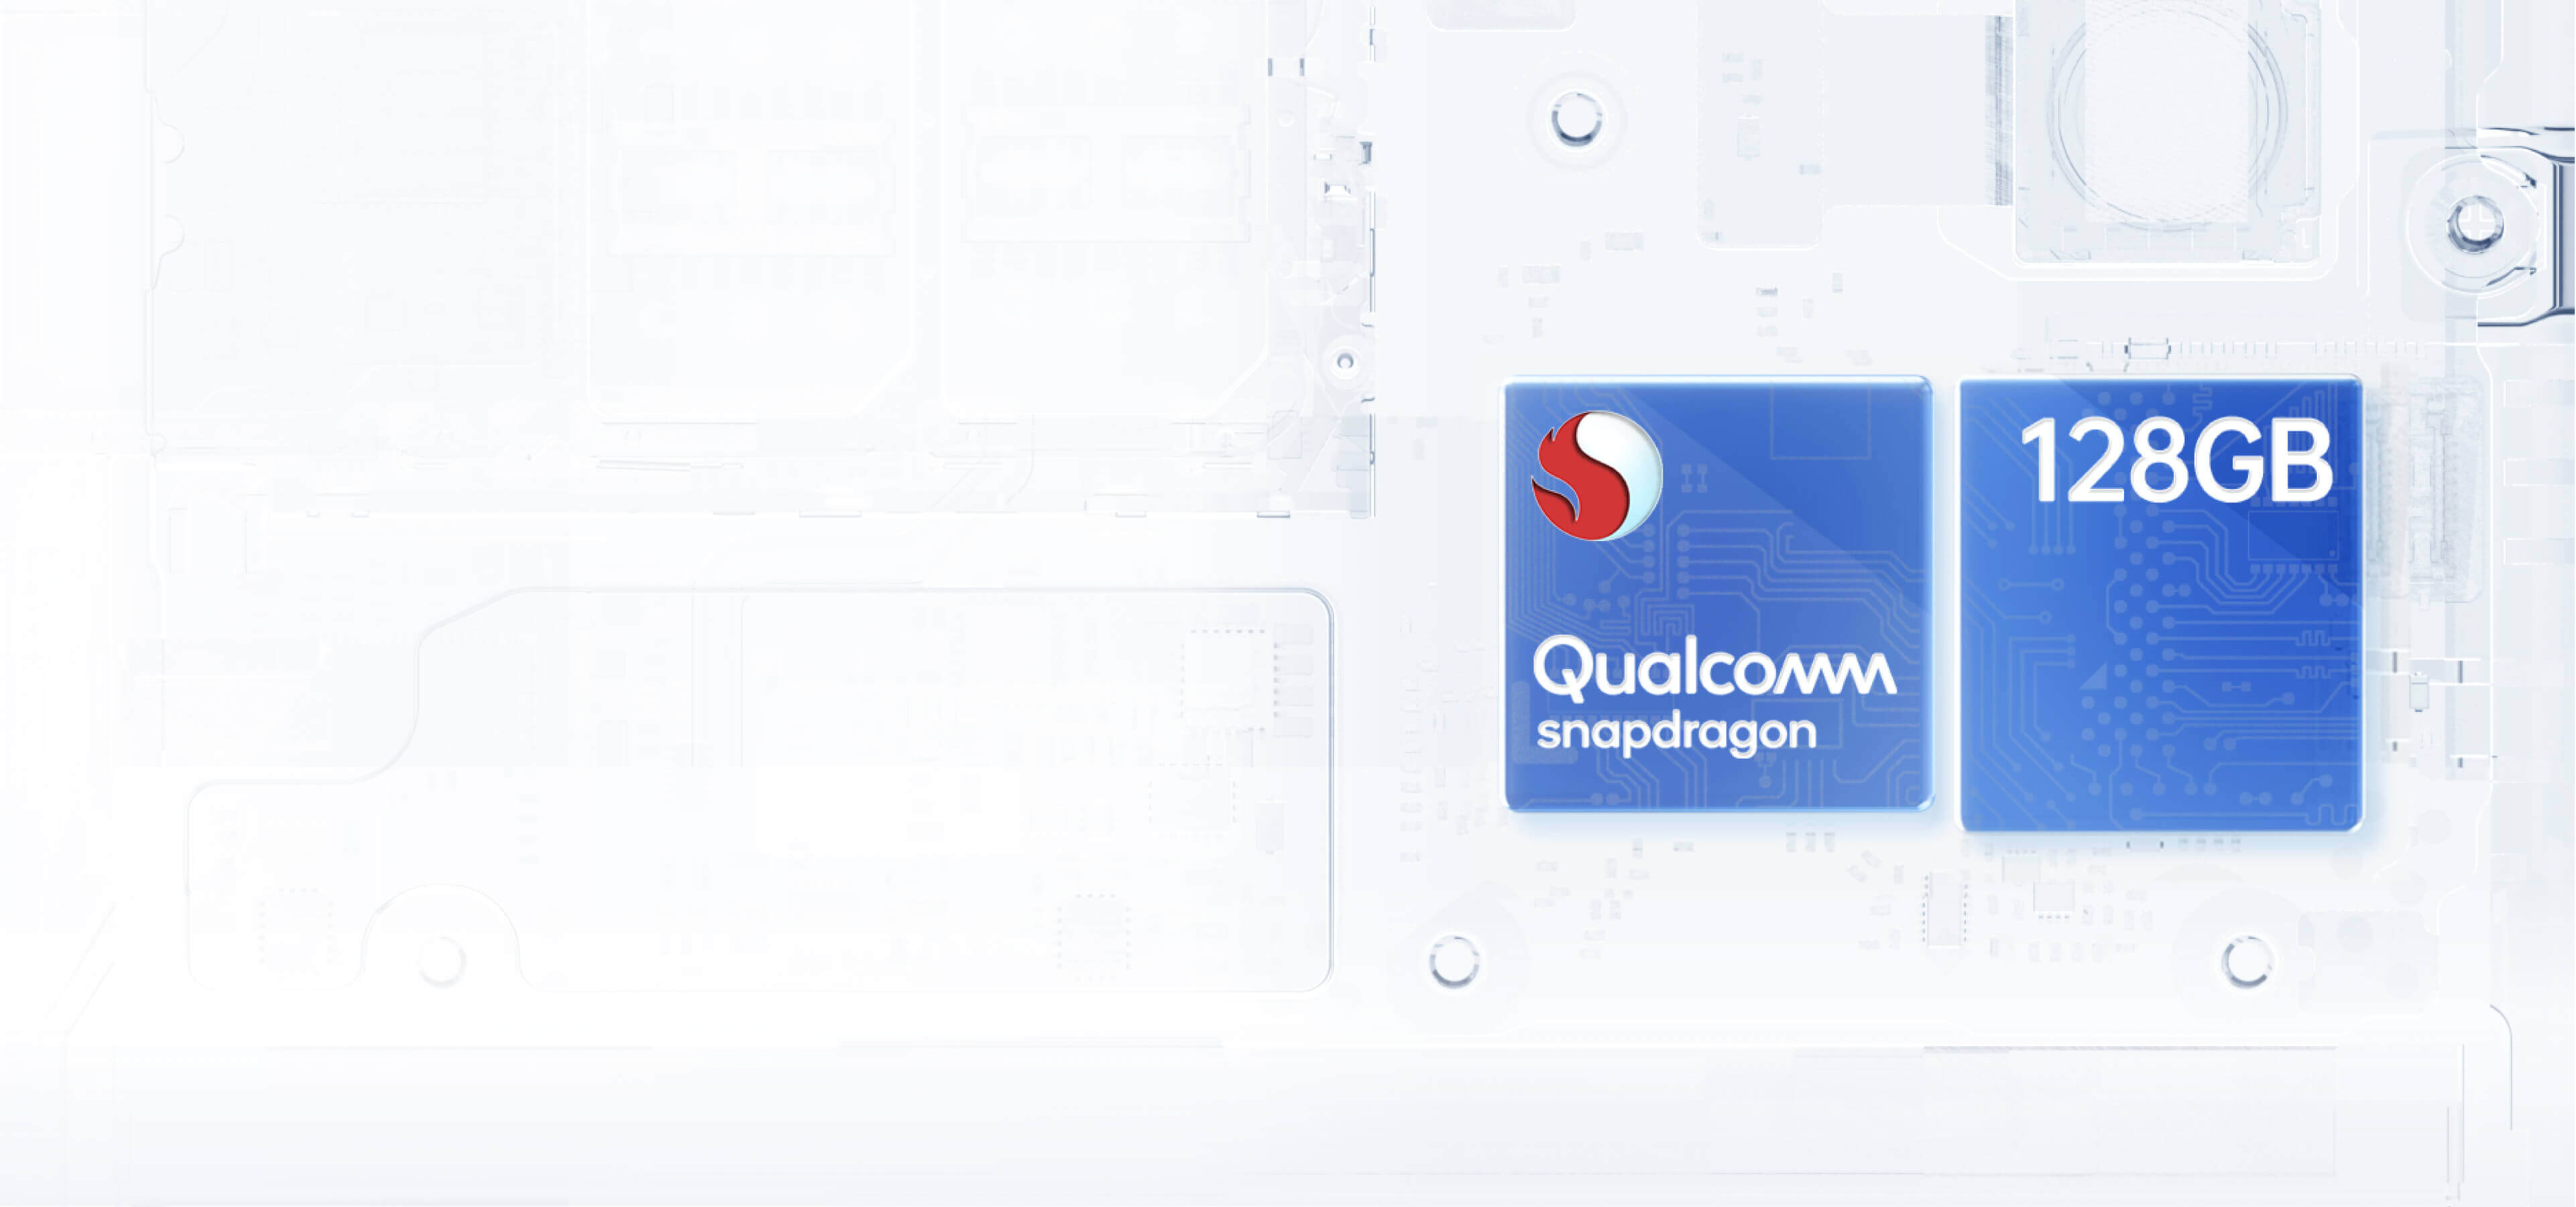 معالج 
OPPO A53 Qualcomm Snapdragon